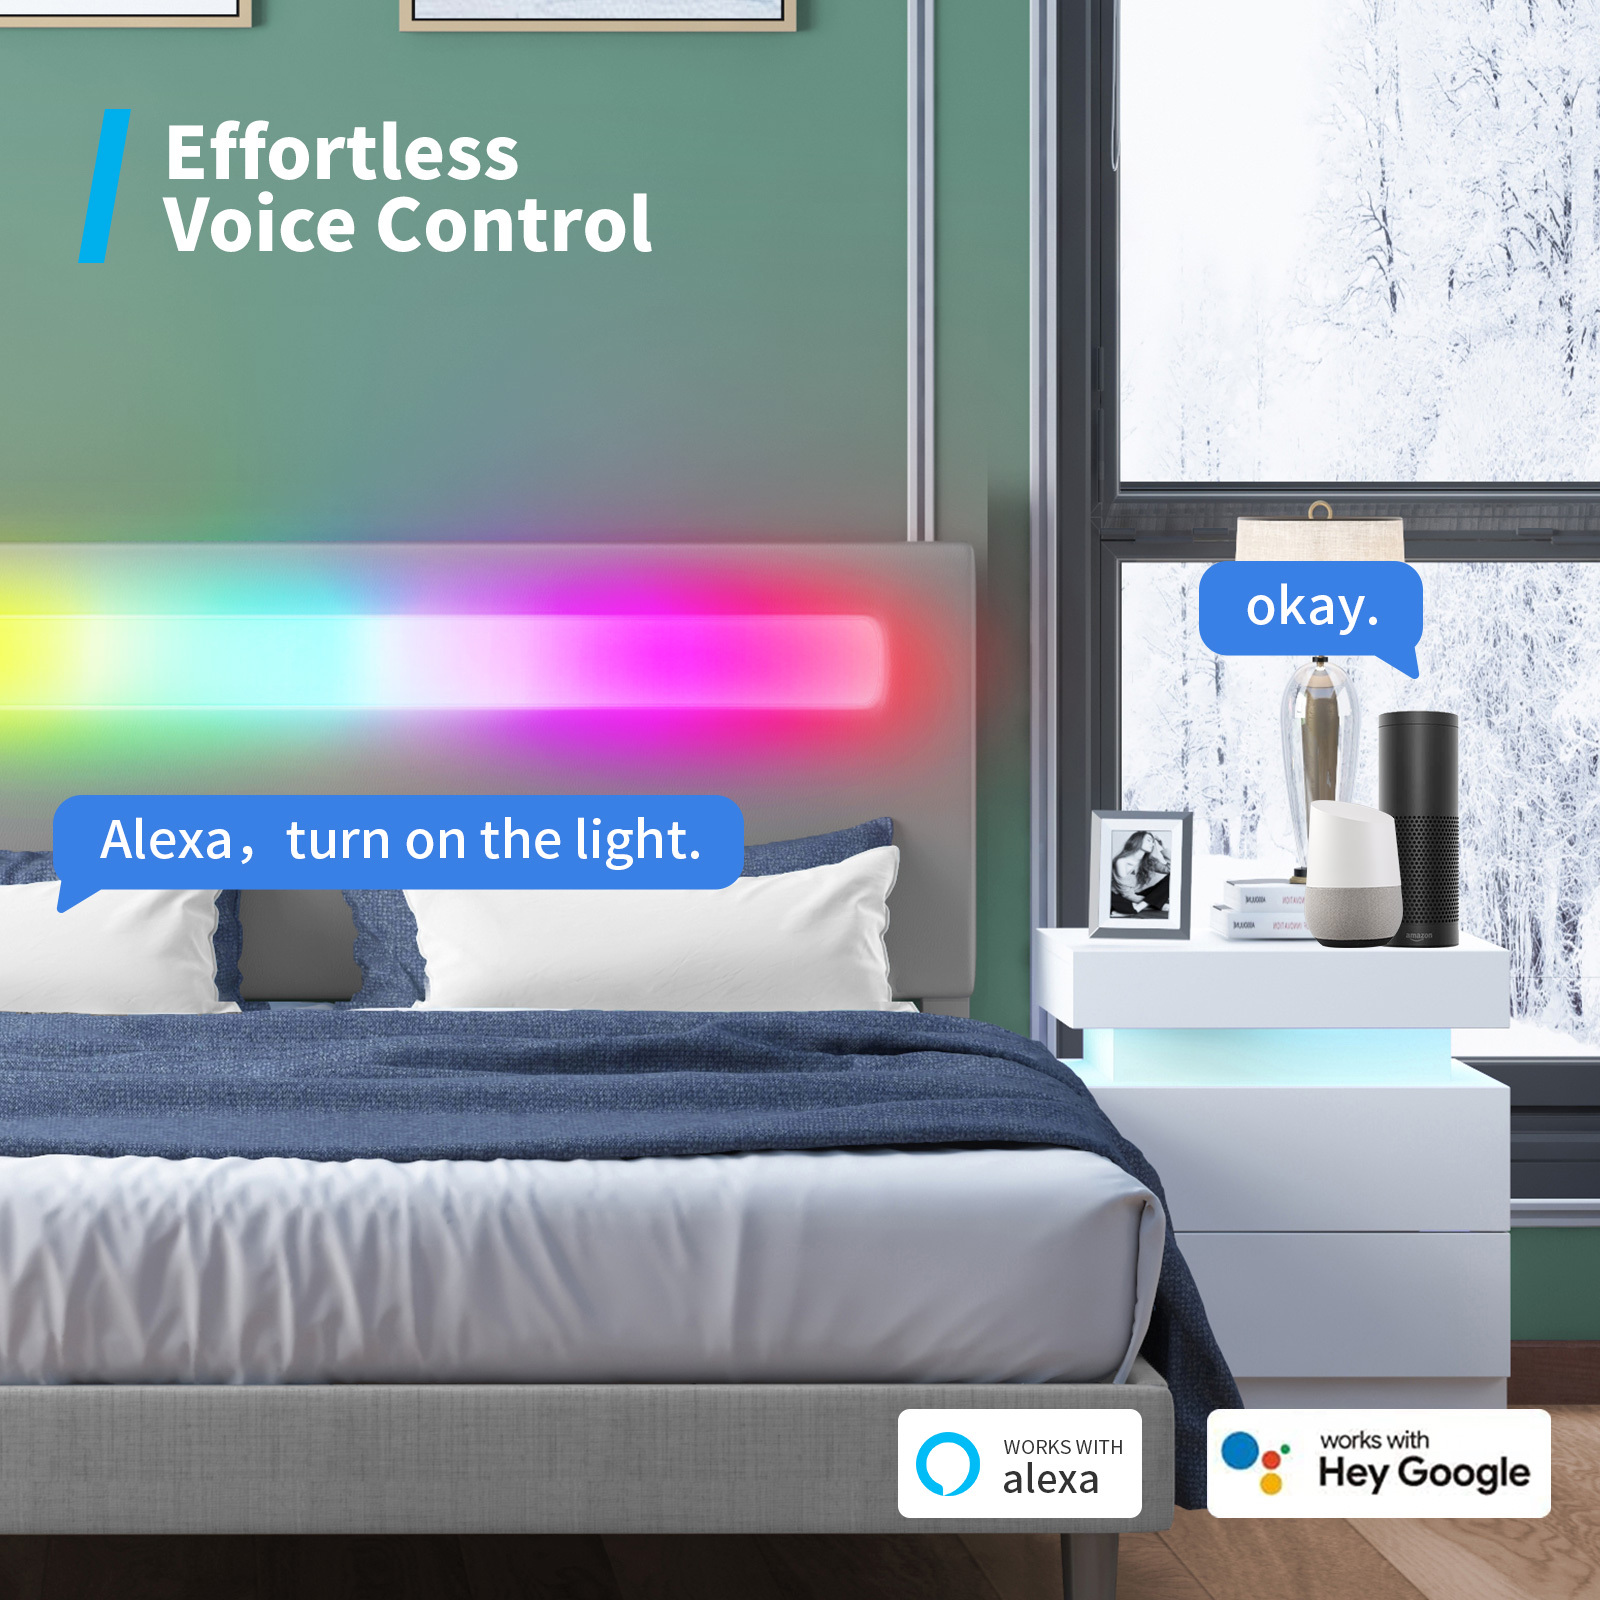 Mjkone Platform Bed Frame with Smart LED Strip Light, Full Size Bed Frame with RGB LED Headboard, RGB LED Light Controlled by Alexa or APP, Full Bed Frames Adjustable Lighting Effects (Full, Grey) - image 5 of 10